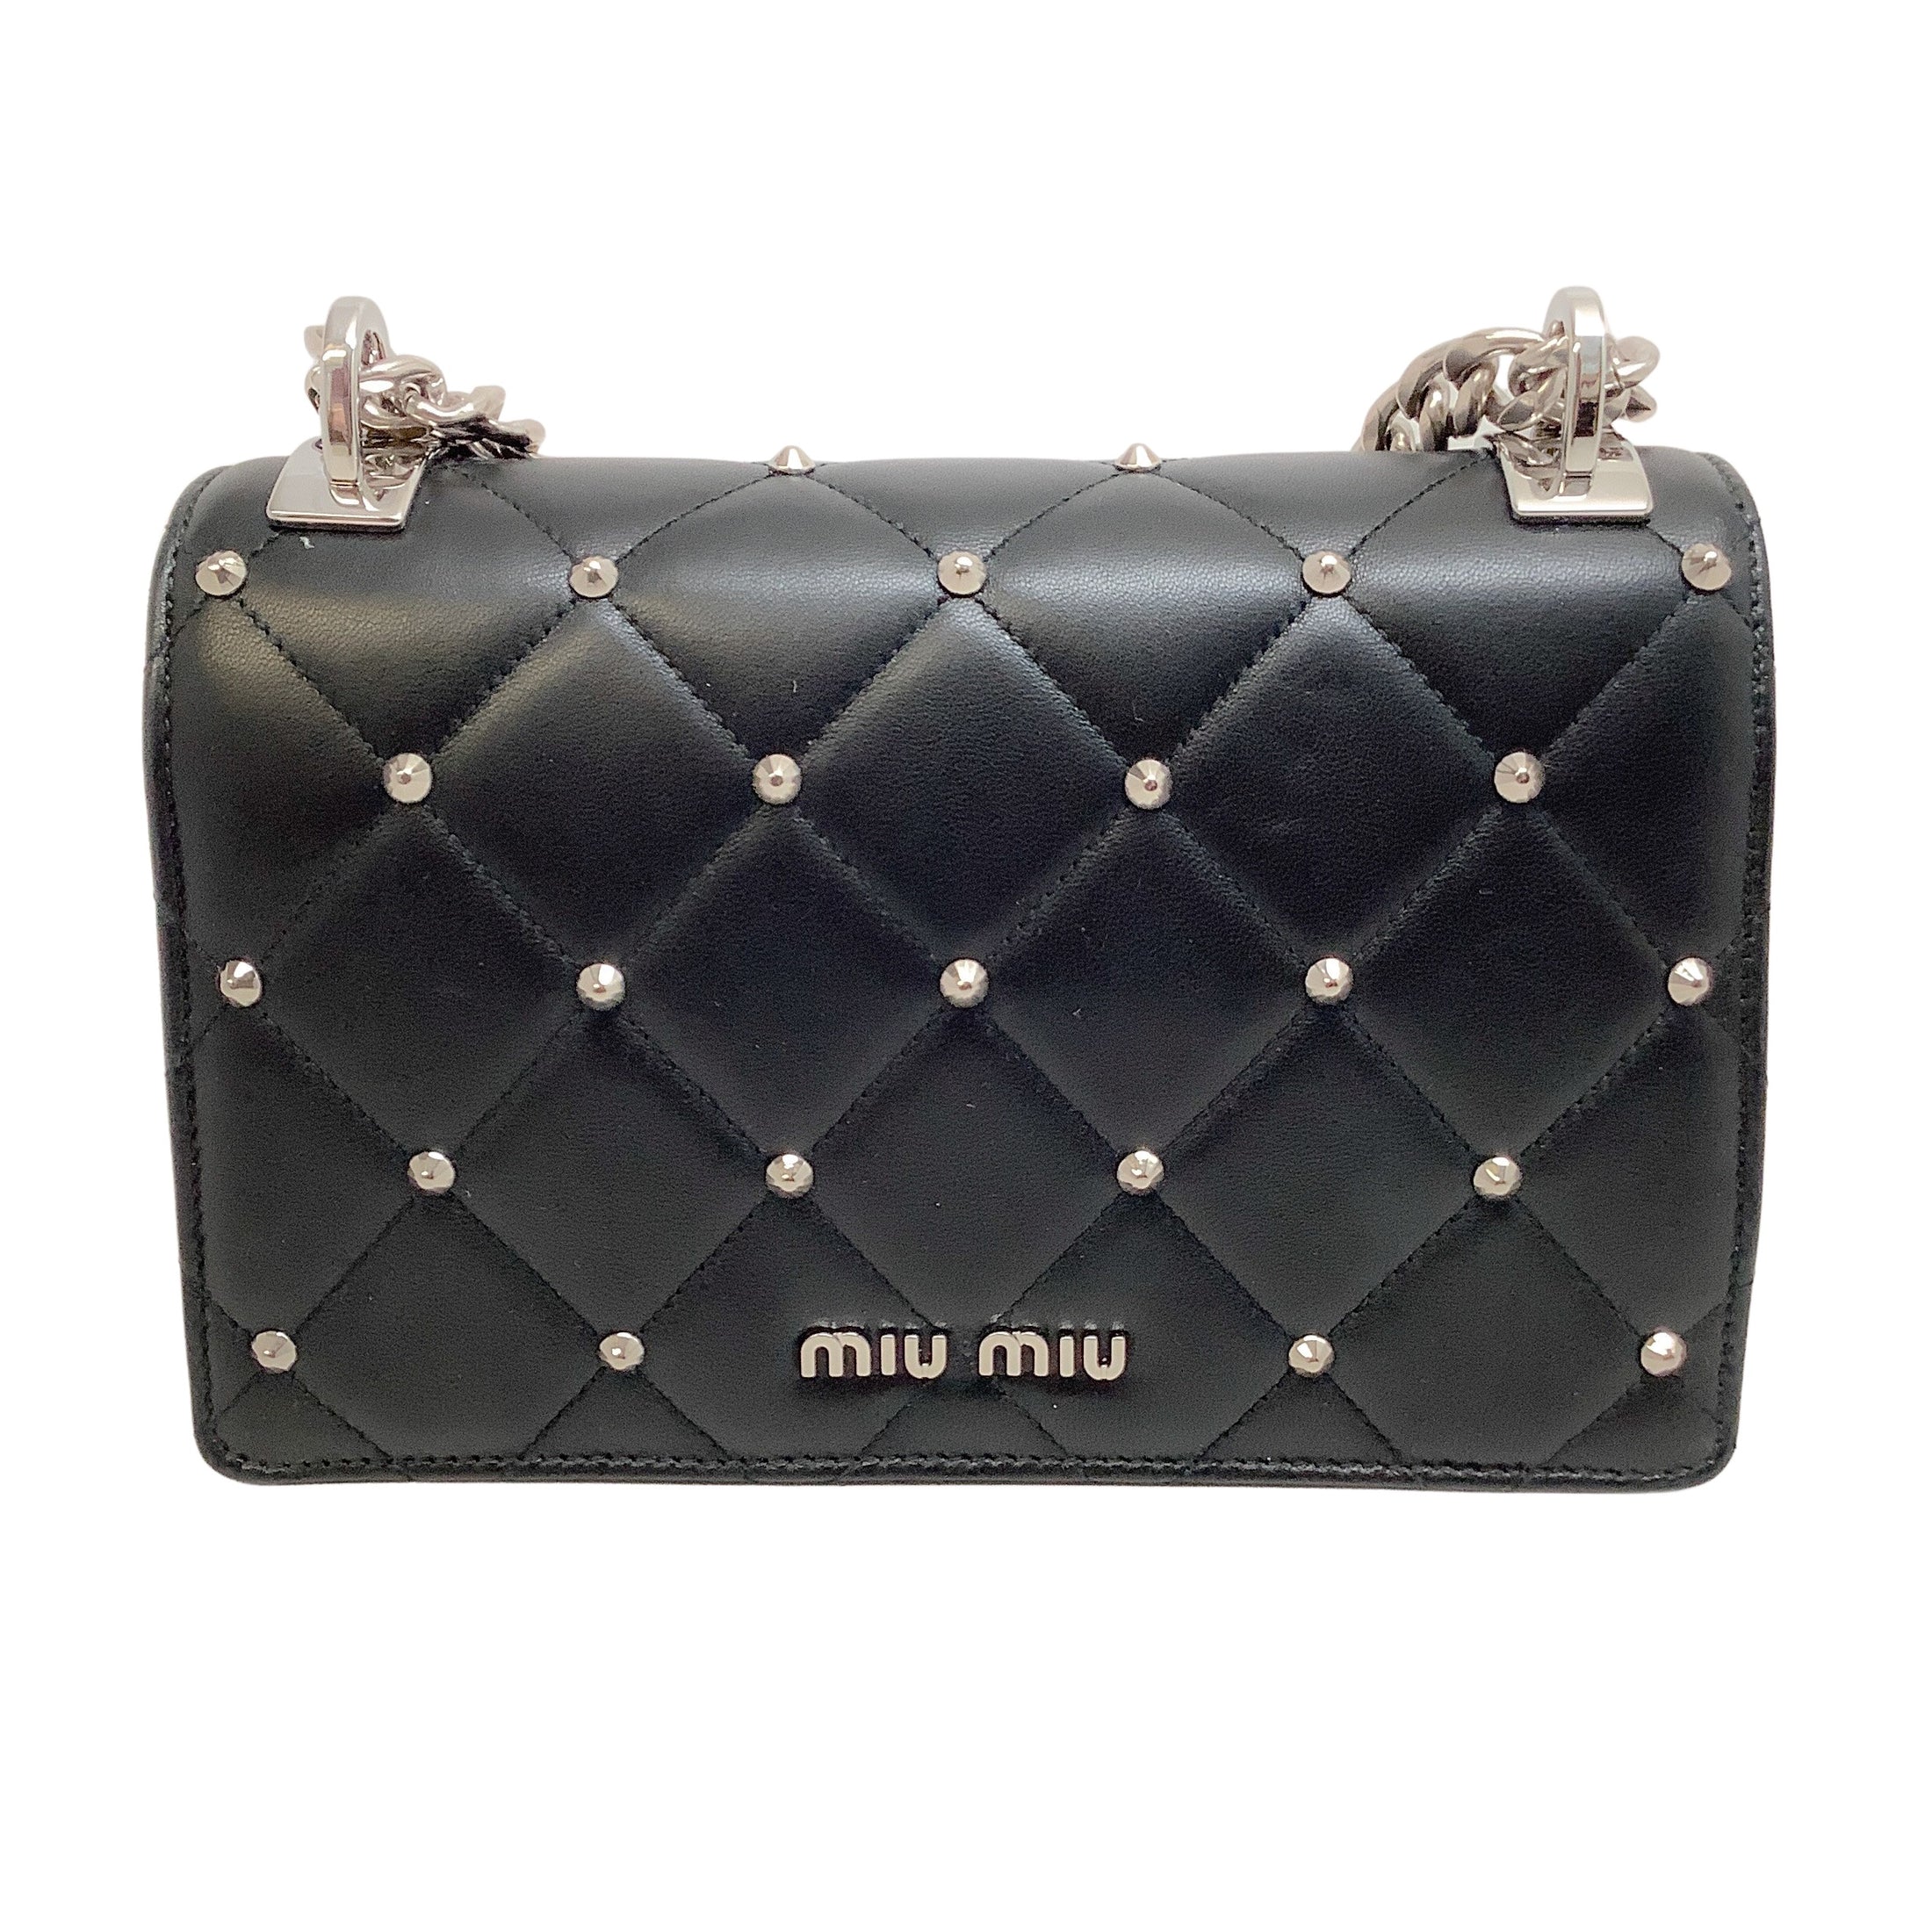 Miu Miu Pattina Nappa Studded Black Leather Shoulder Bag